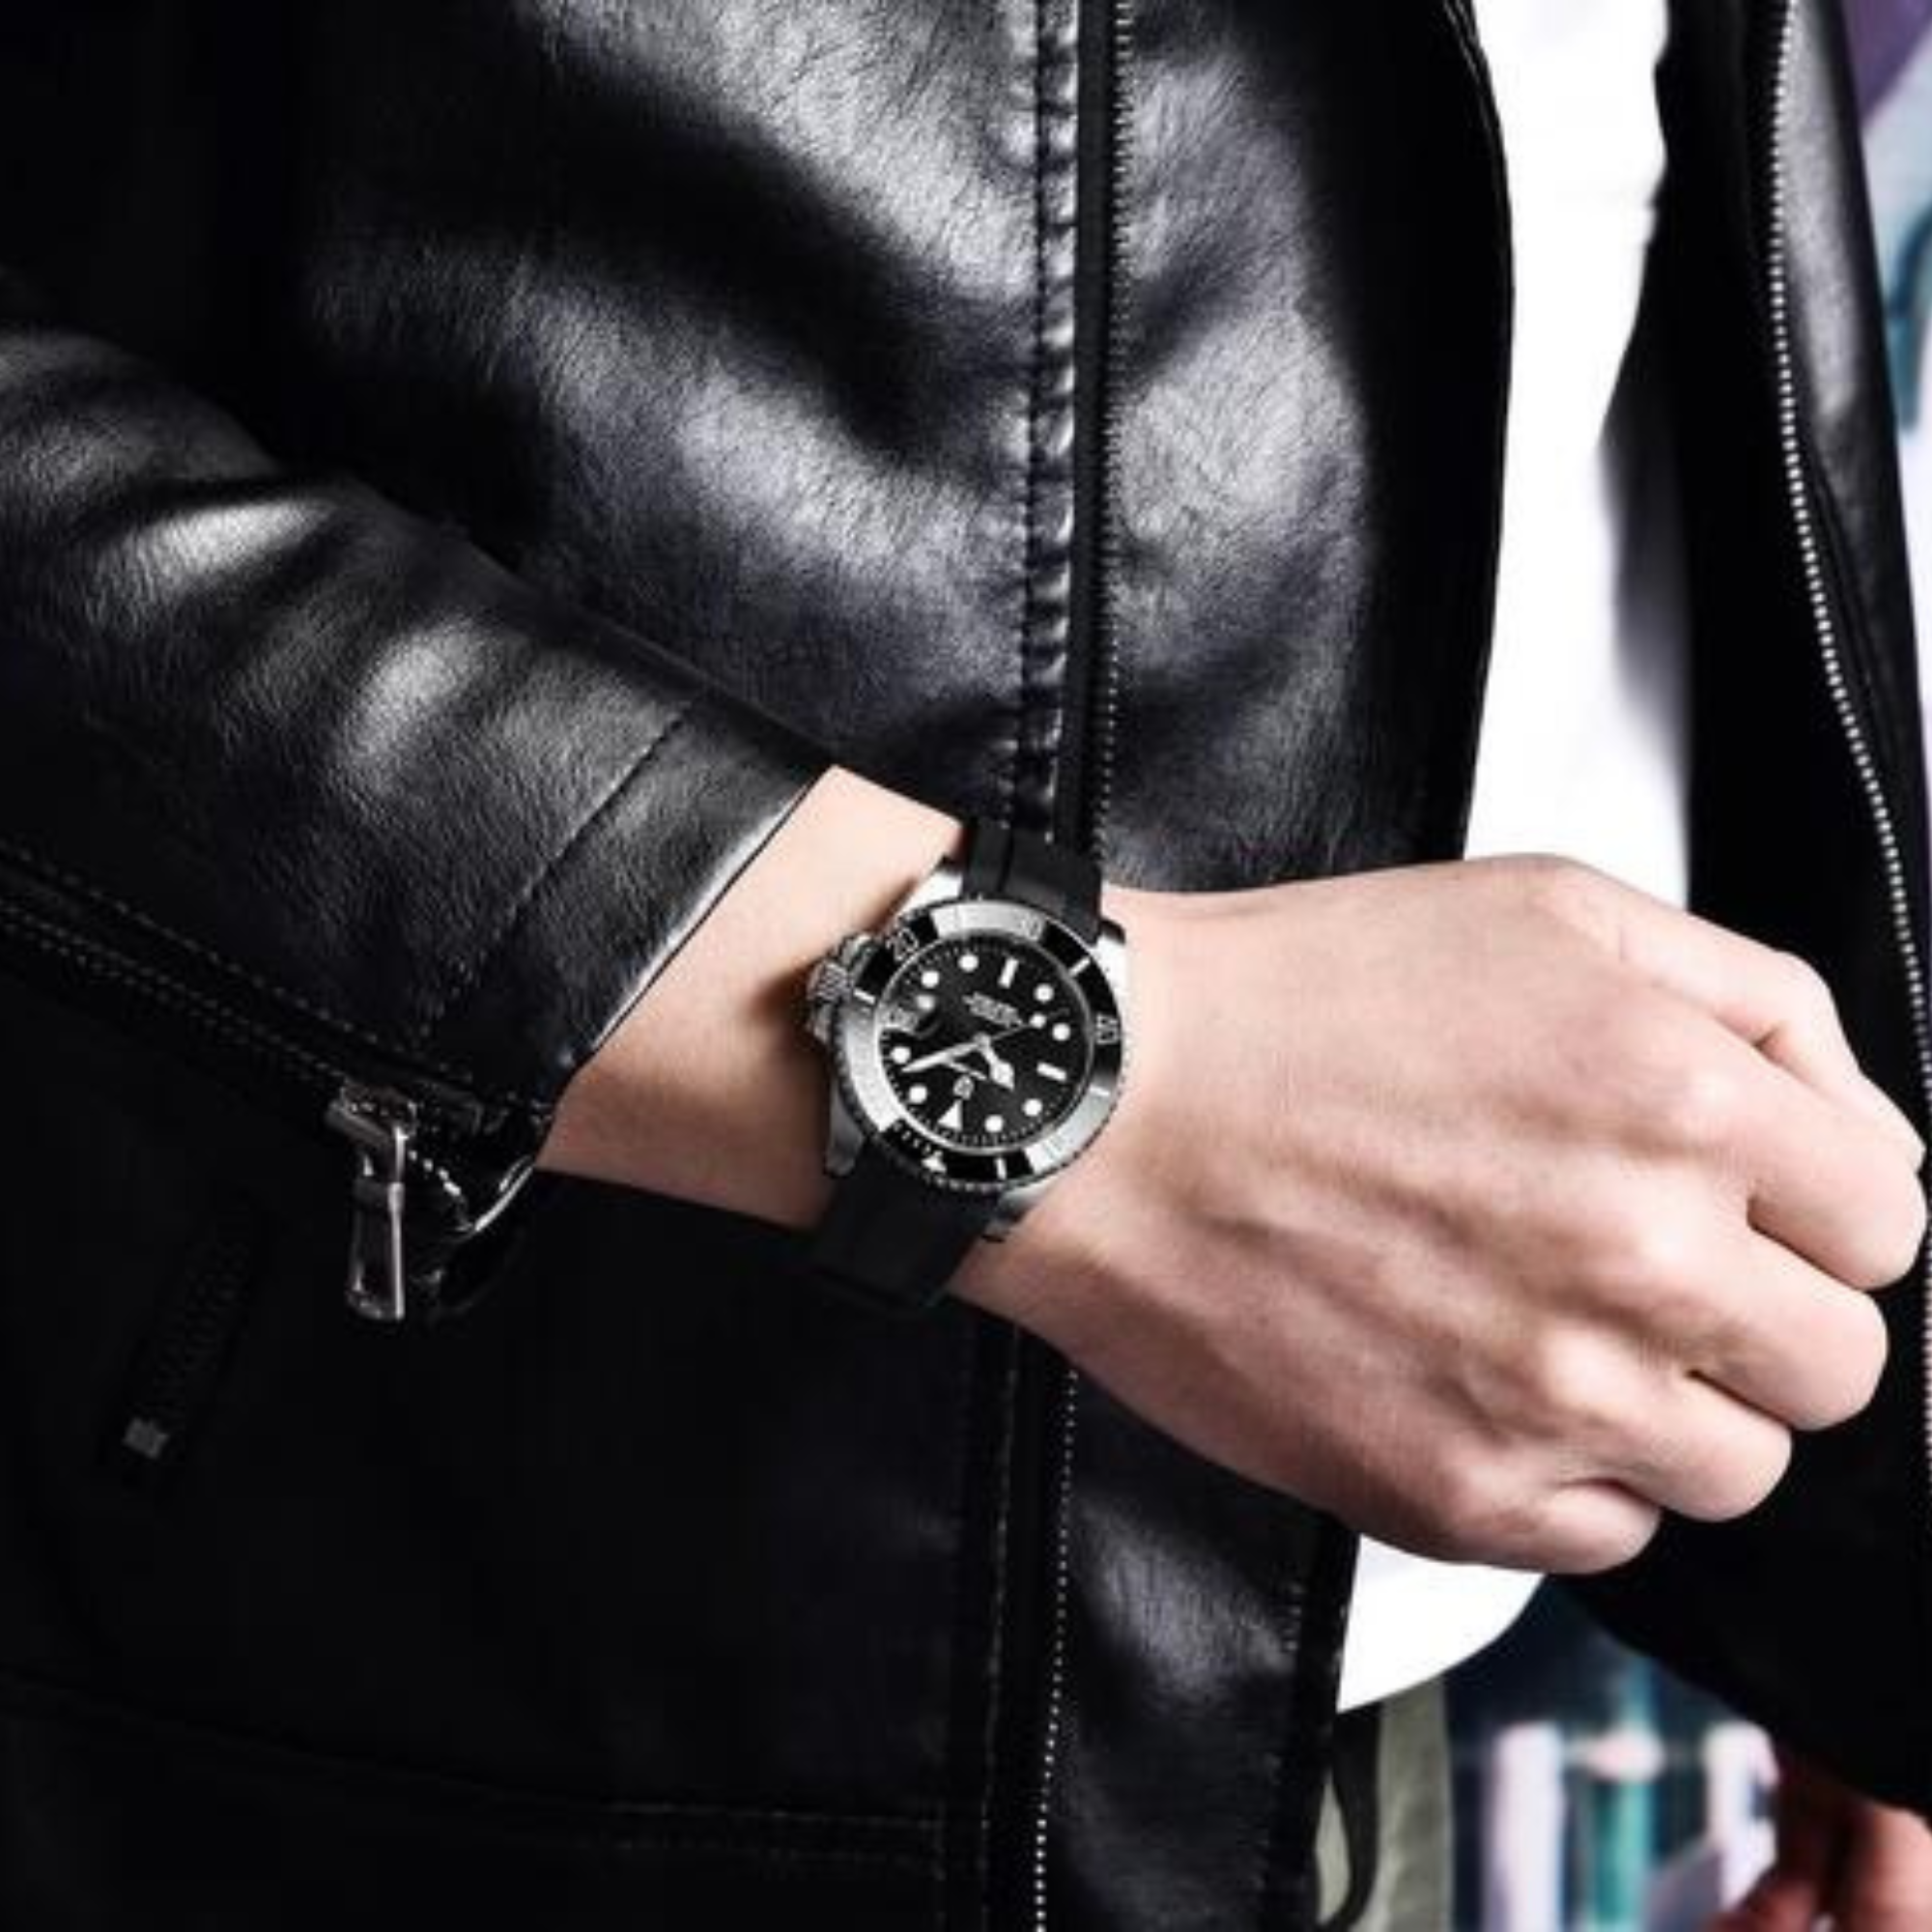 Pagani Design PD-1661 Waterproof Mechanical Automatic Watch  Men's 40MM Watch Black